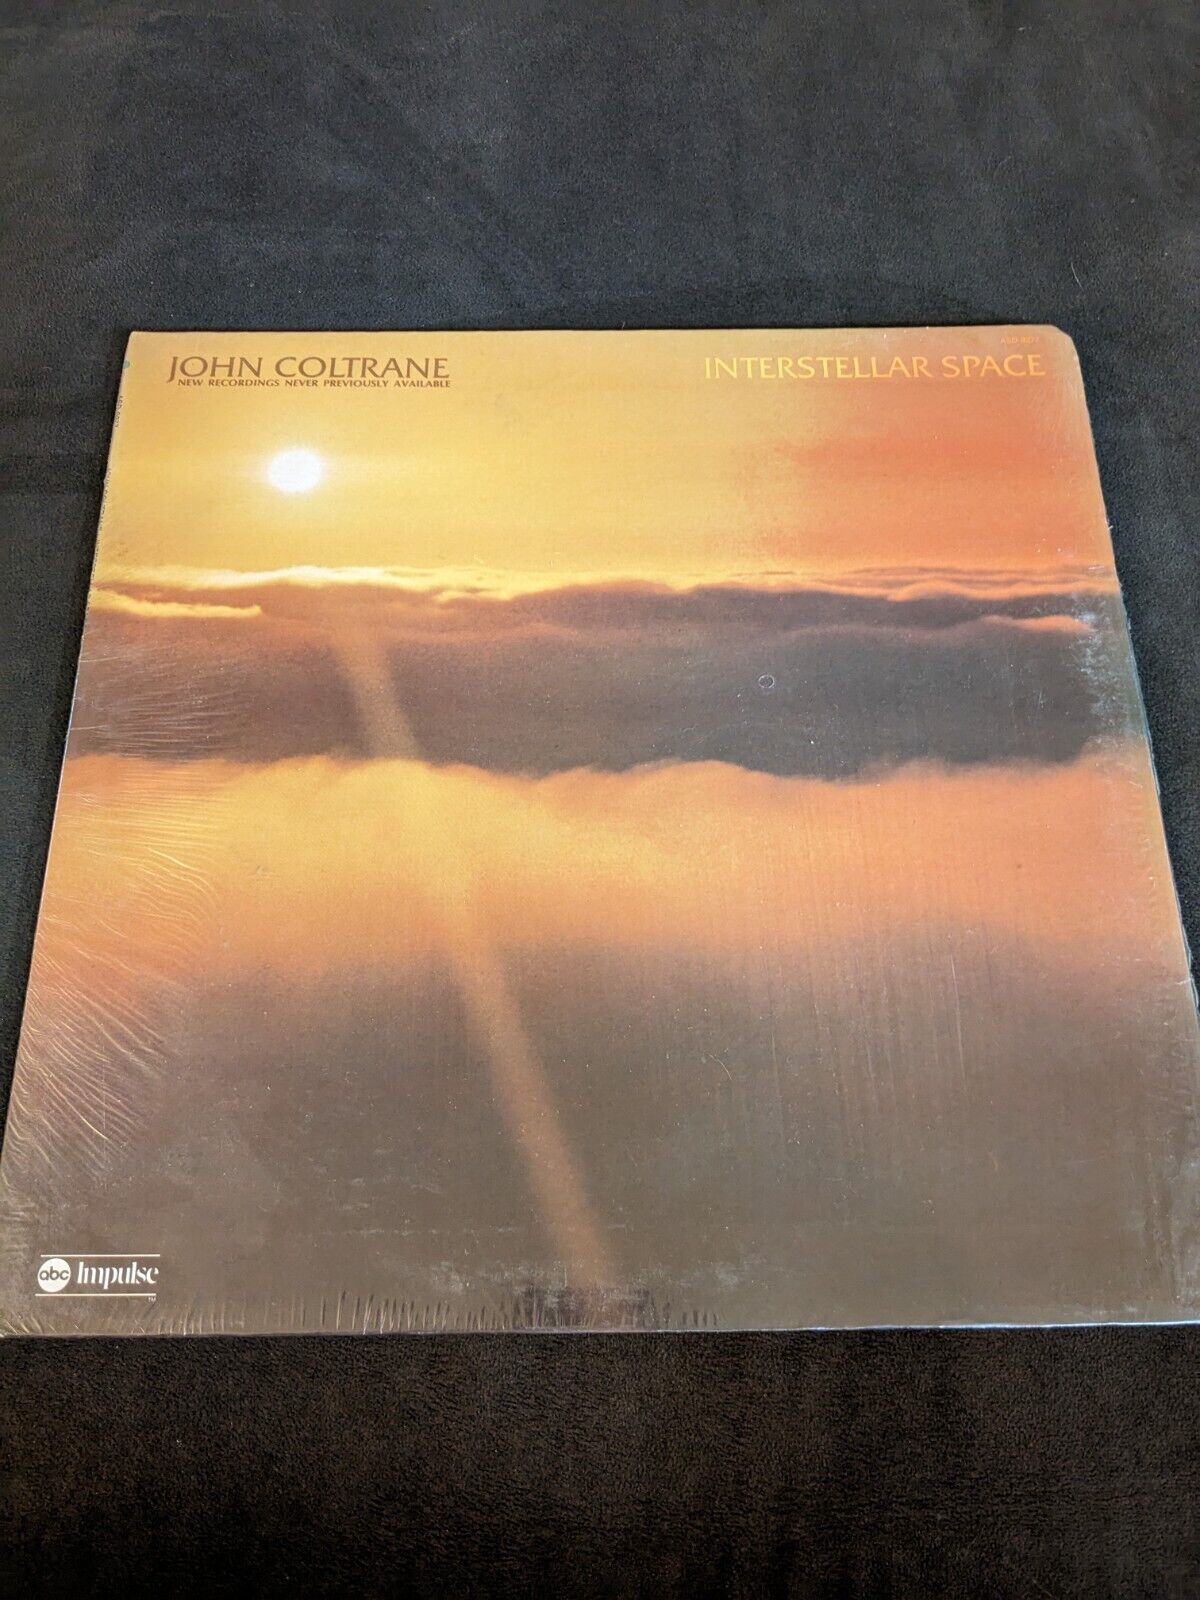 1st Pressing Vinyl LP - Interstellar Space - John Coltrane - w/ original sleeves